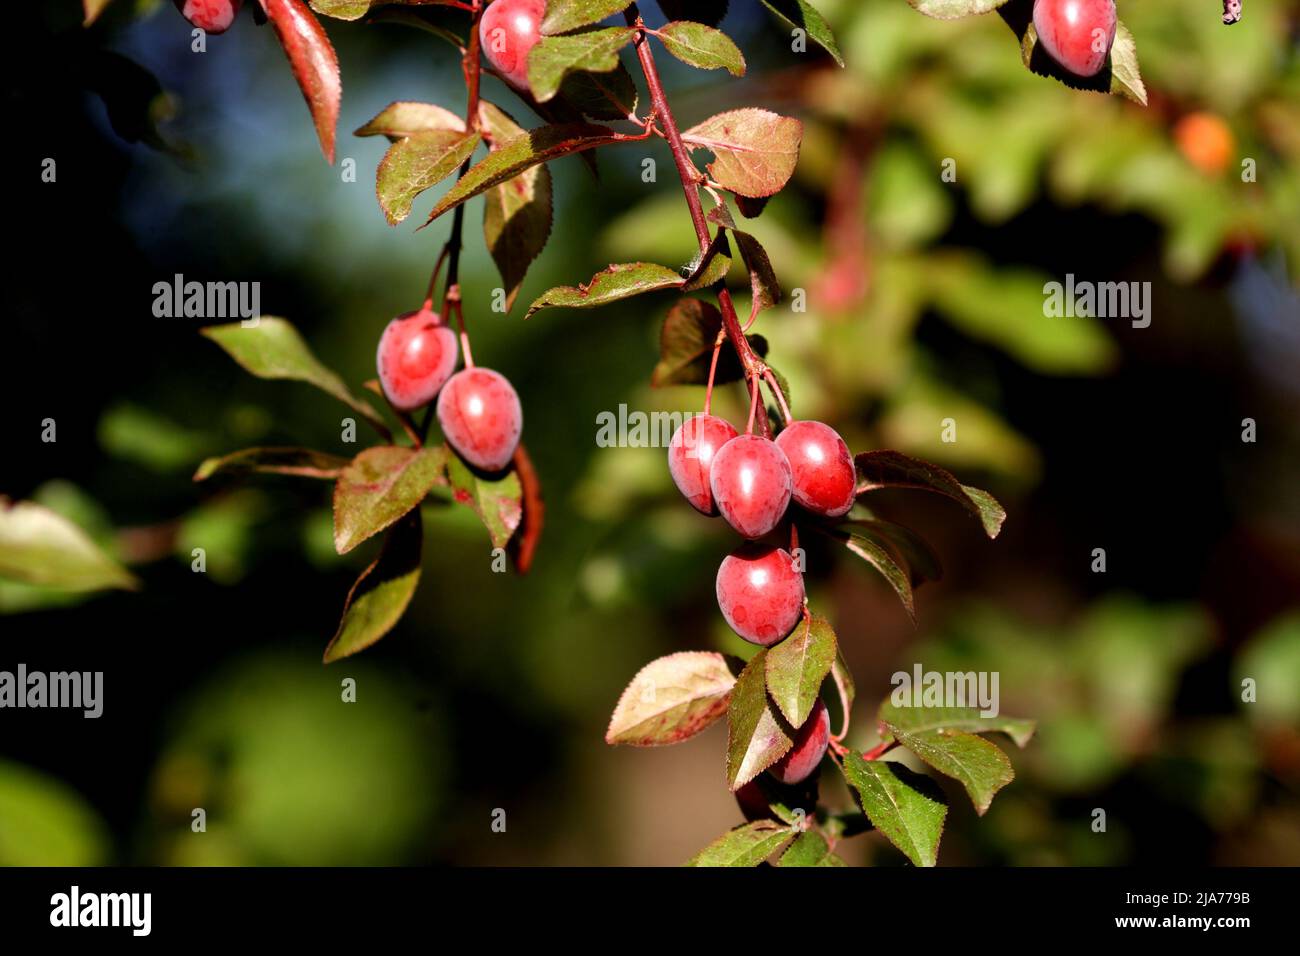 Cherry plum tree, prunus cerasifera, growing in a garden, Szigethalom, Hungary Stock Photo